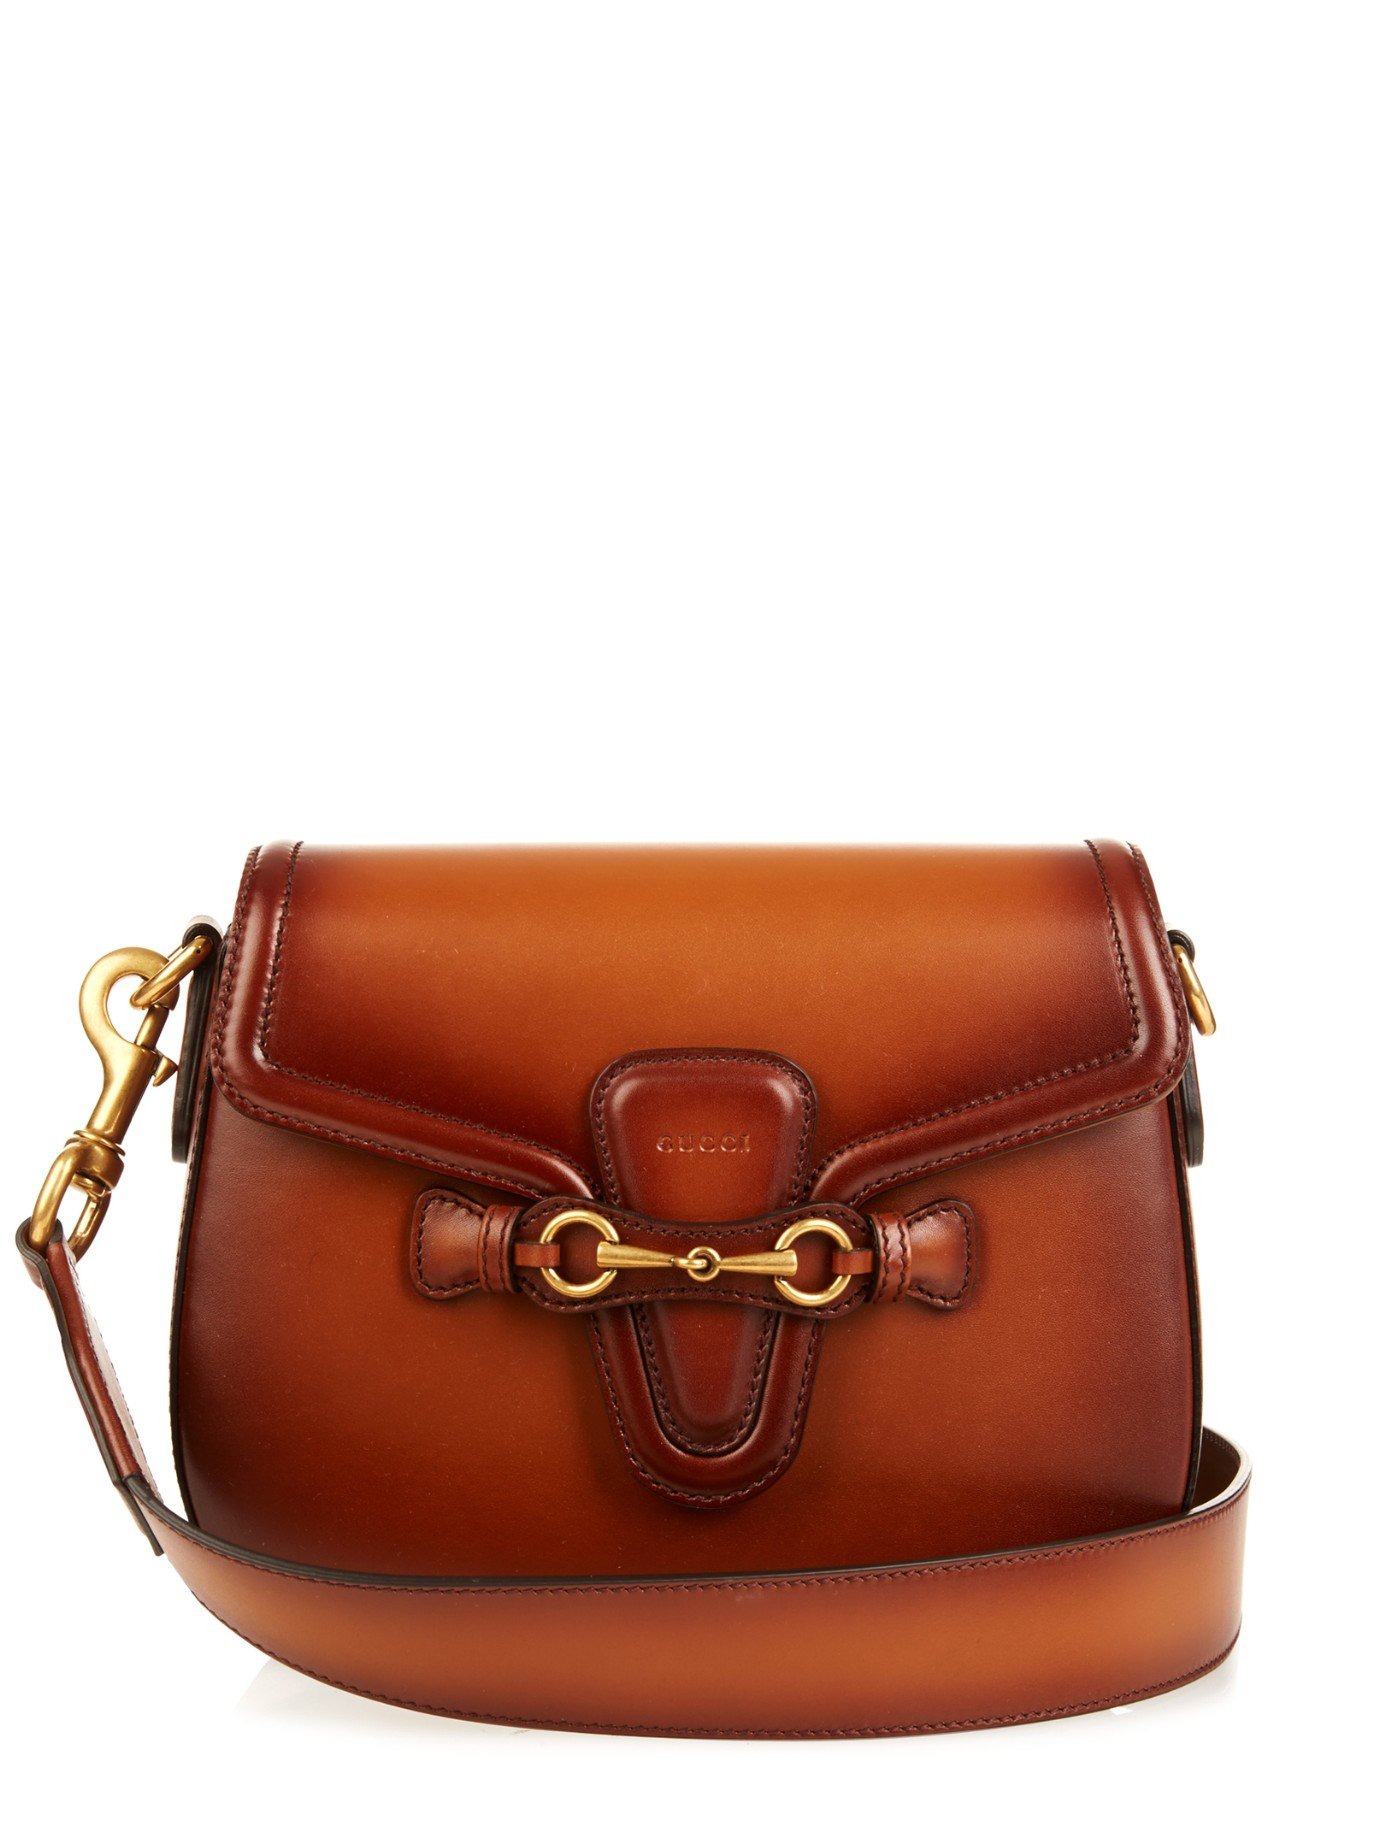 Gucci Lady Web Medium Leather Shoulder Bag in Brown Lyst